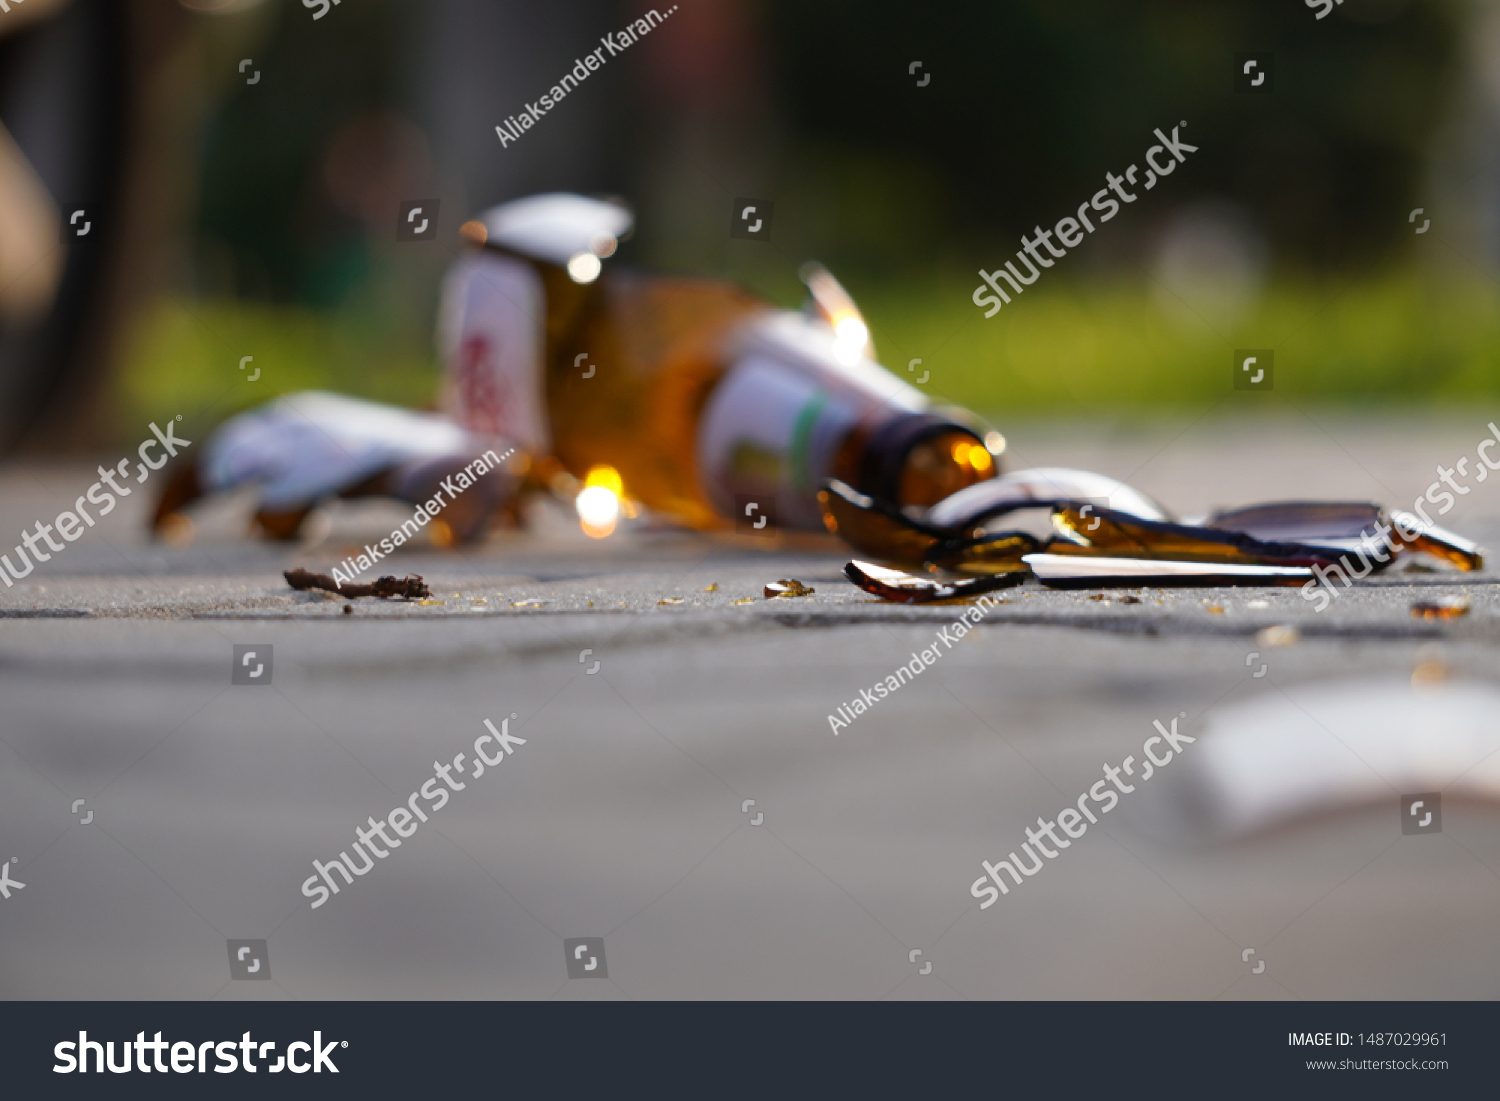 bottle of beer, soda or drugs from dark glass is broken. Shattered beer bottle on ground in sunset light. Fragments of glass on asphalt. Texture, background, wallpaper. #1487029961